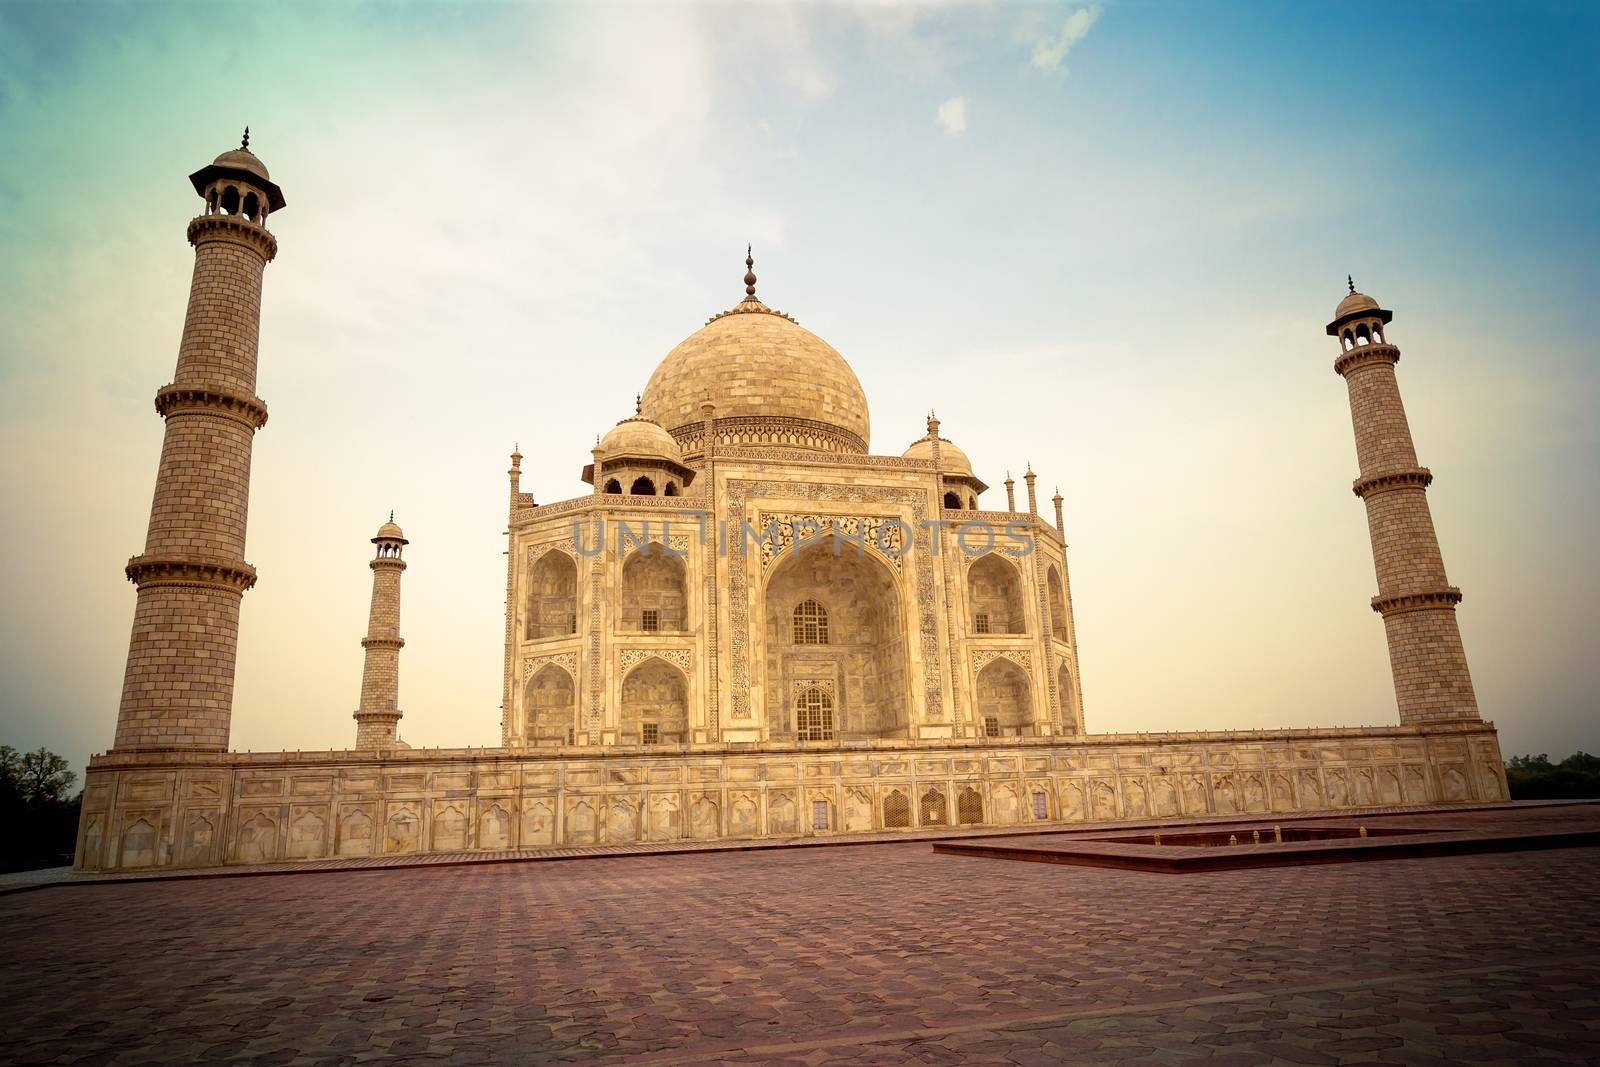 Photo of the Taj Mahal in Agra, India.